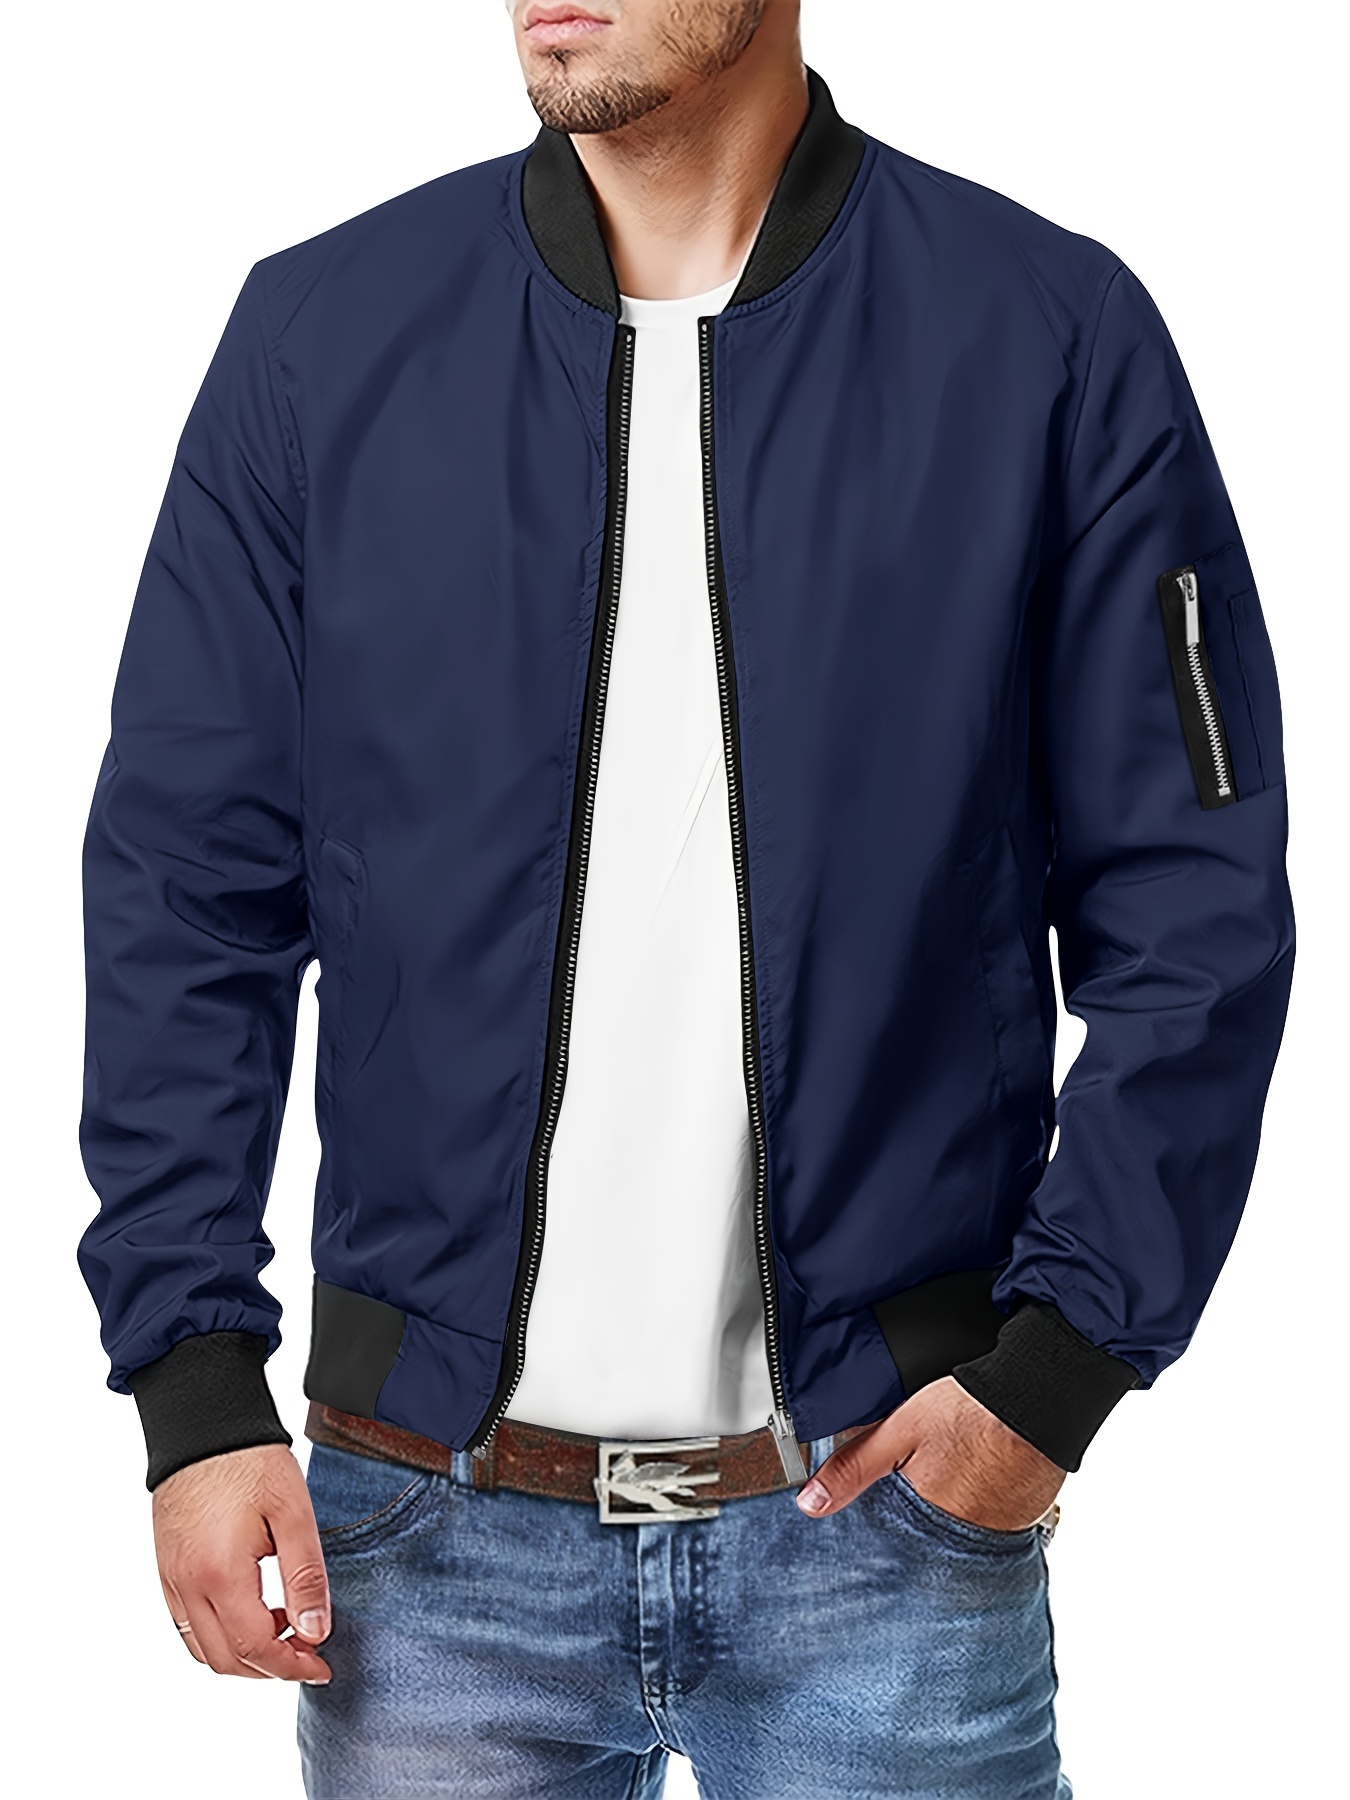 Classic Bomber Jacket, Men's Casual Baseball Jacket Coat Regular Fit  College Hipster Windbreaker For Winter Fall